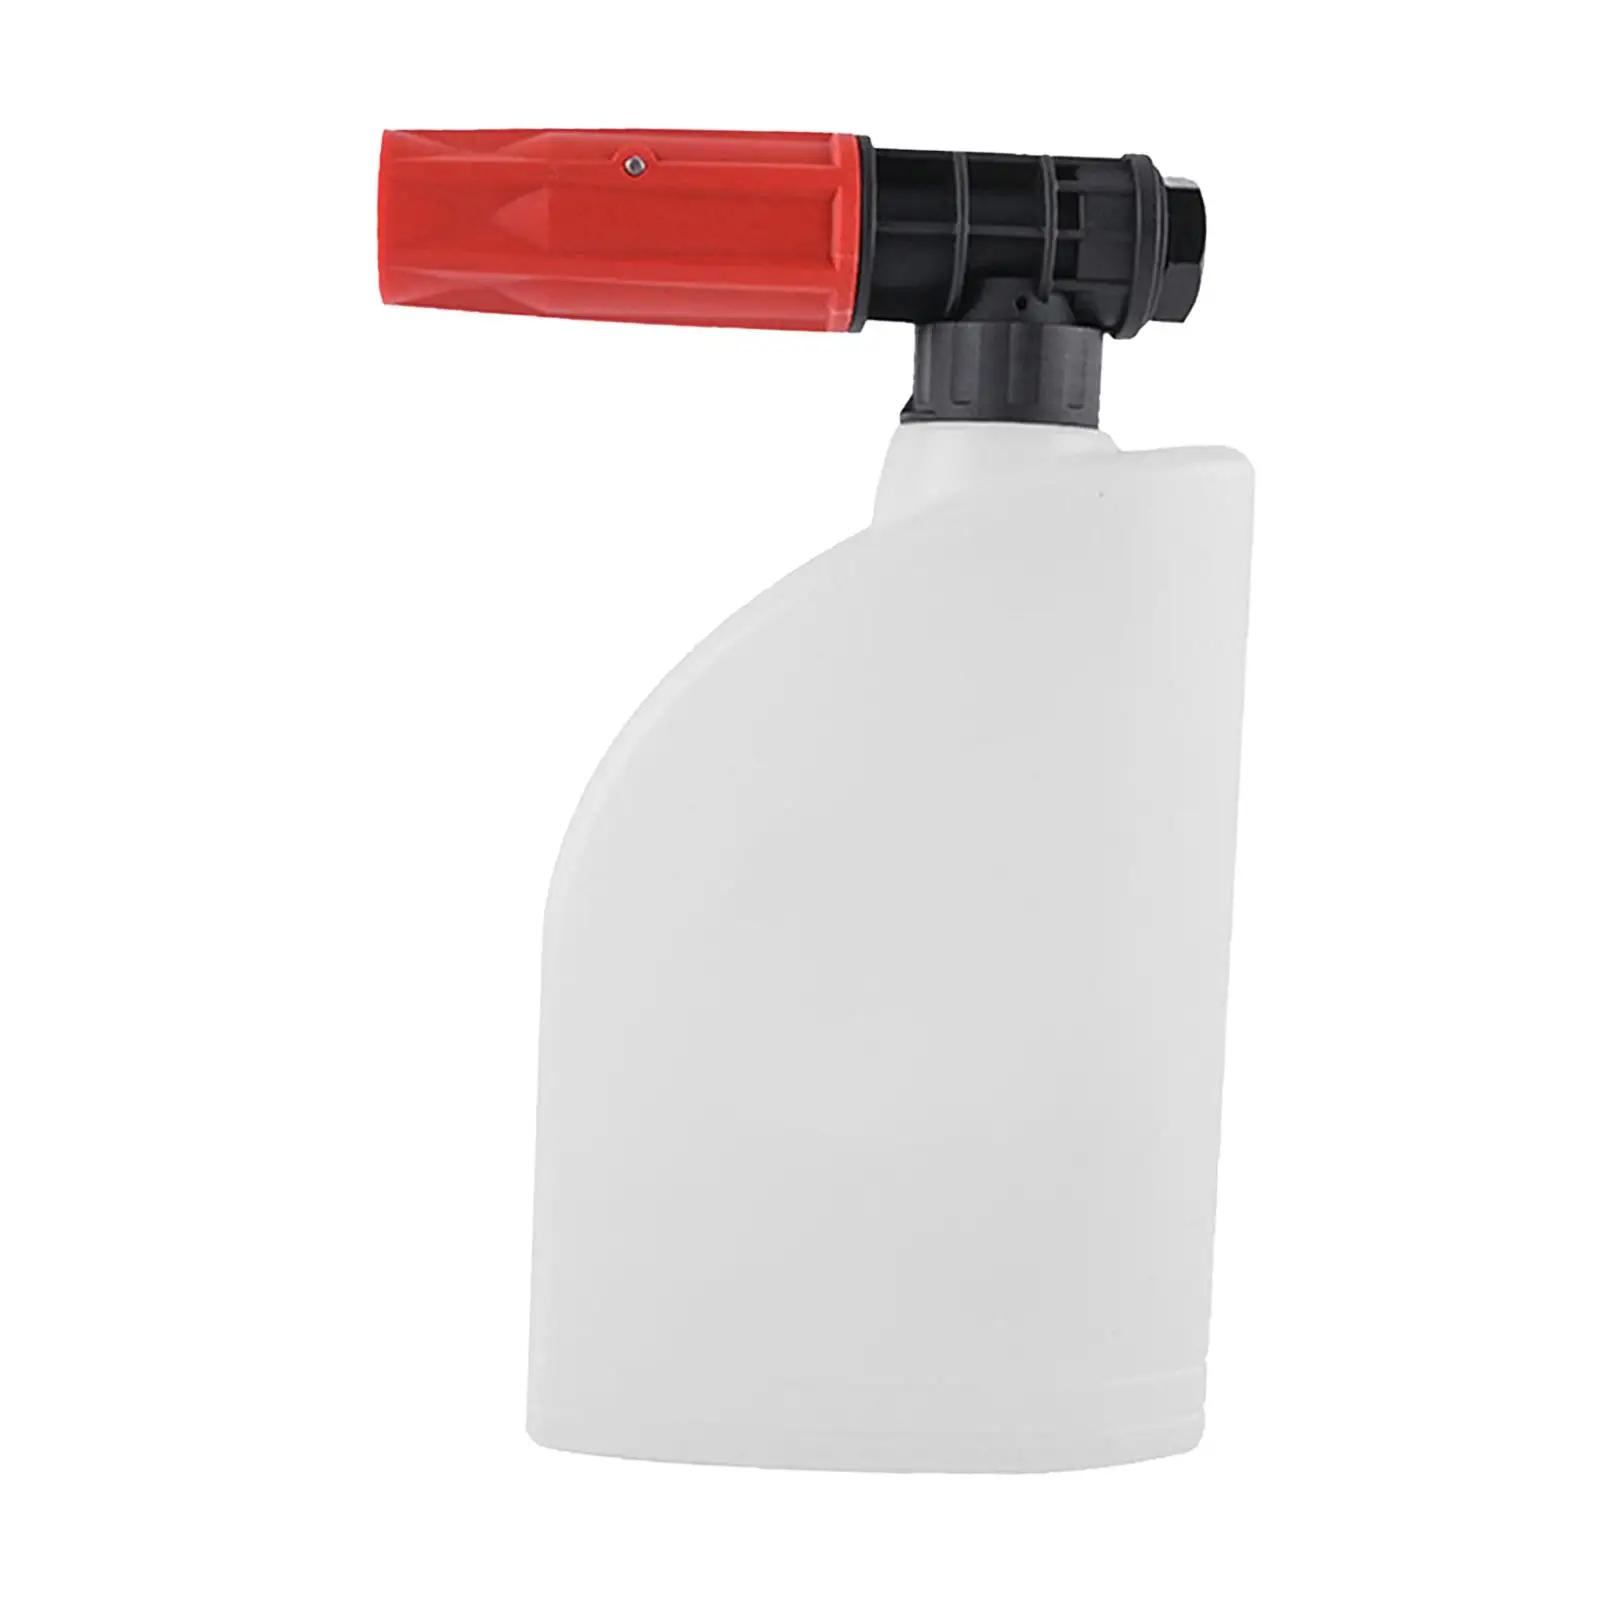 Foam Sprayer Manual 600ml High Pressure Foam Sprayer for Car Washing Indoor Outdoor Automotive Detailing House Cleaning Garden